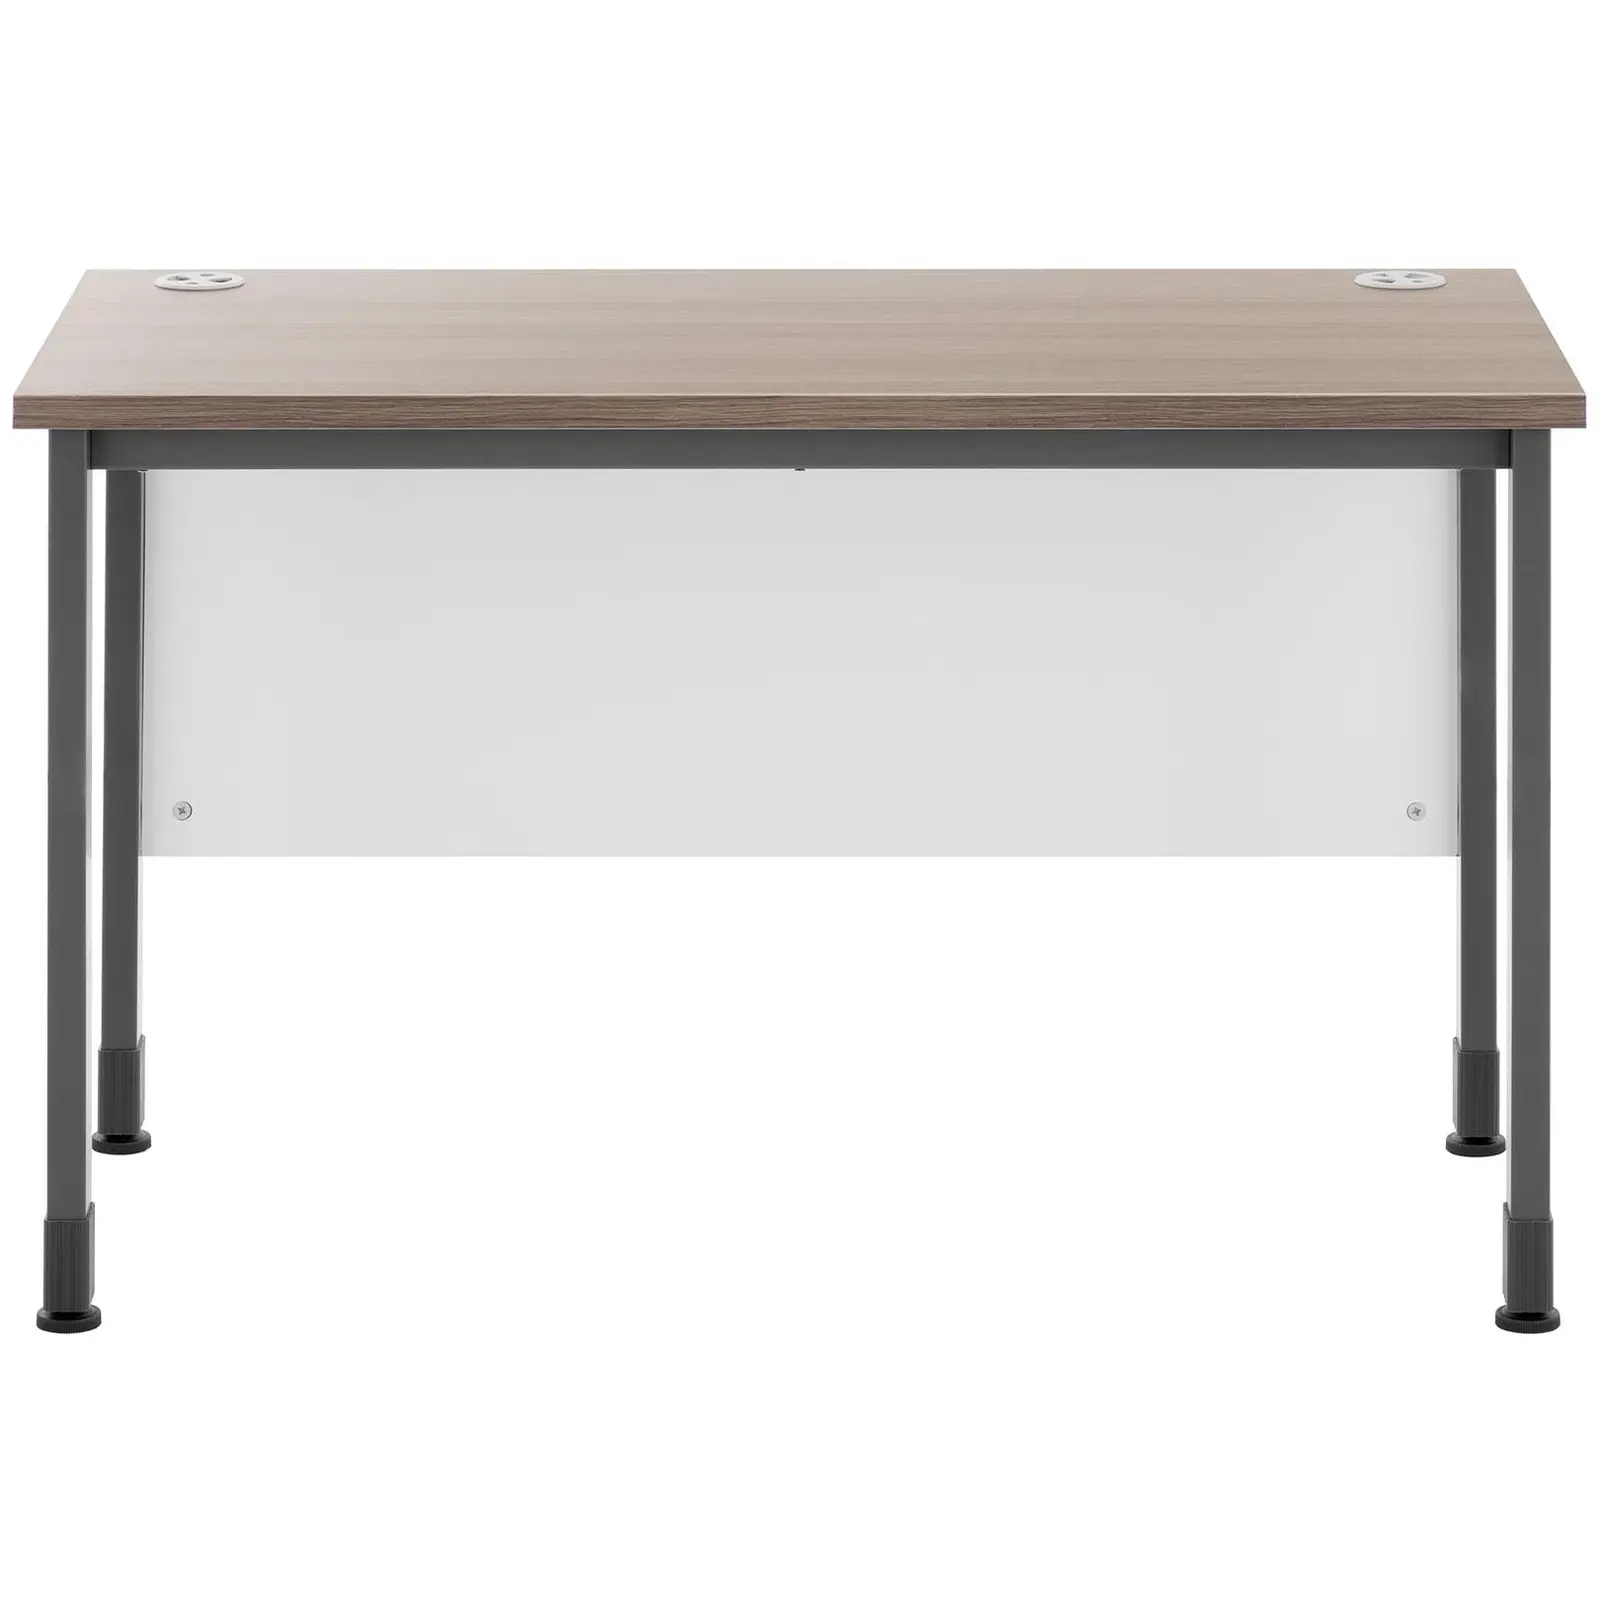 Office Desk - 120 x 60 cm - brown/grey